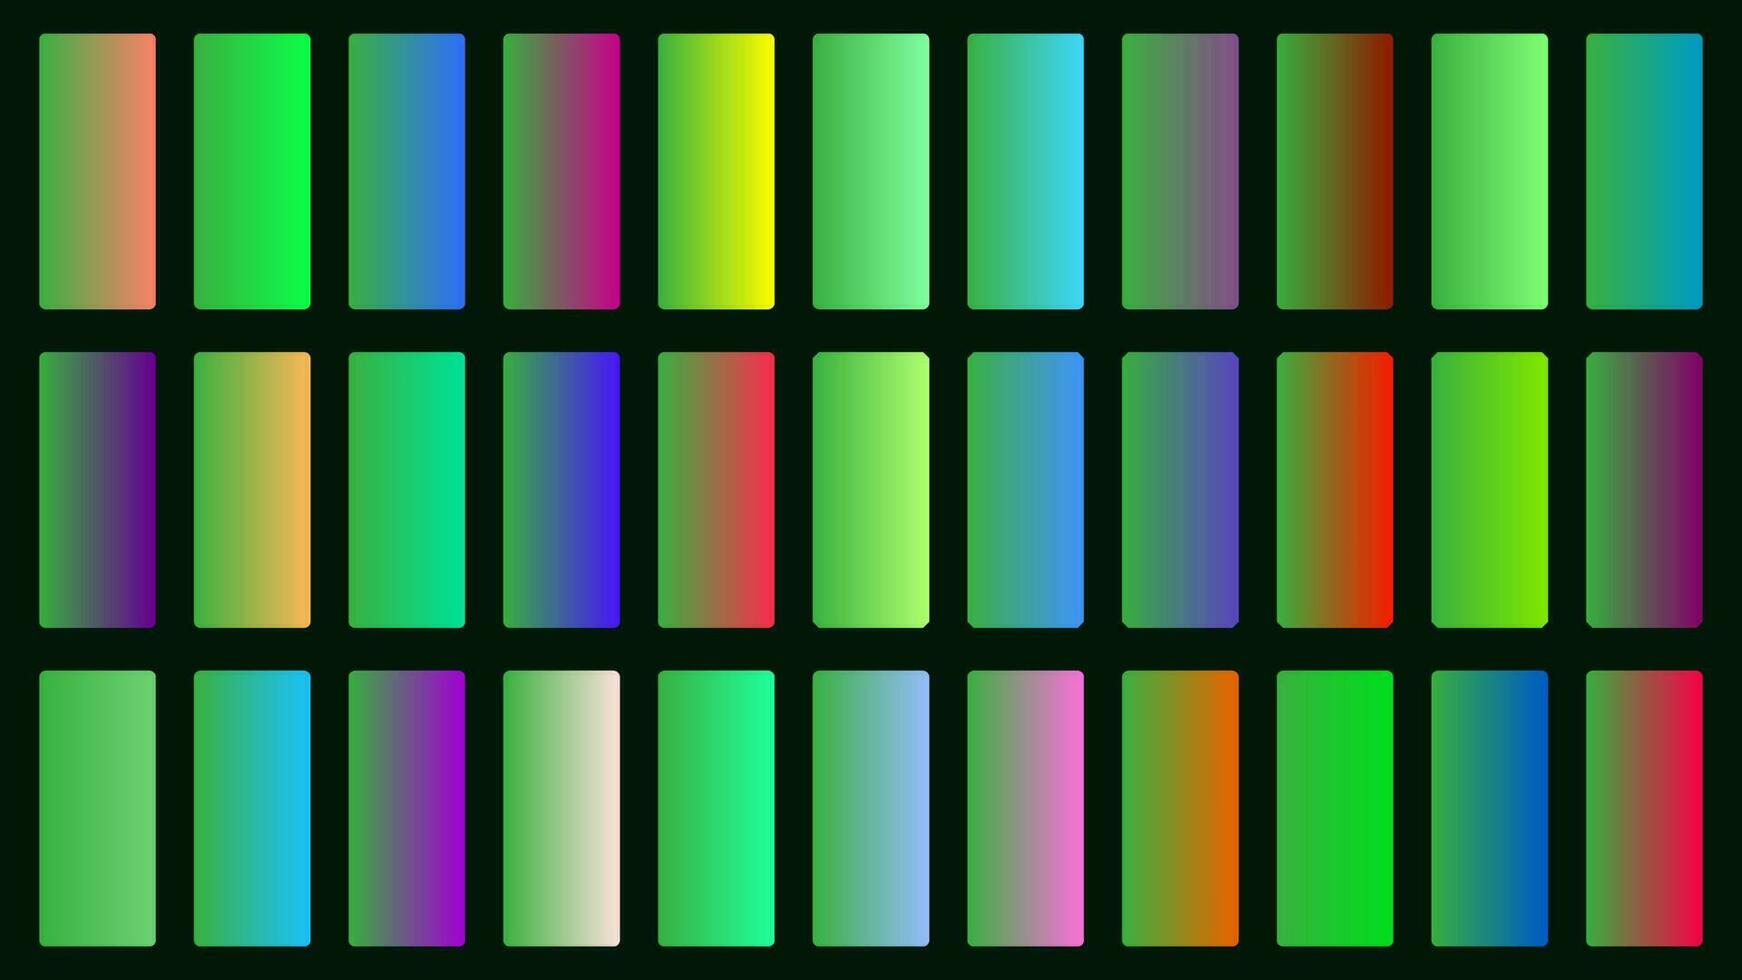 colorida verde cor sombra linear gradiente paleta amostras rede kit arredondado retângulos modelo conjunto vetor